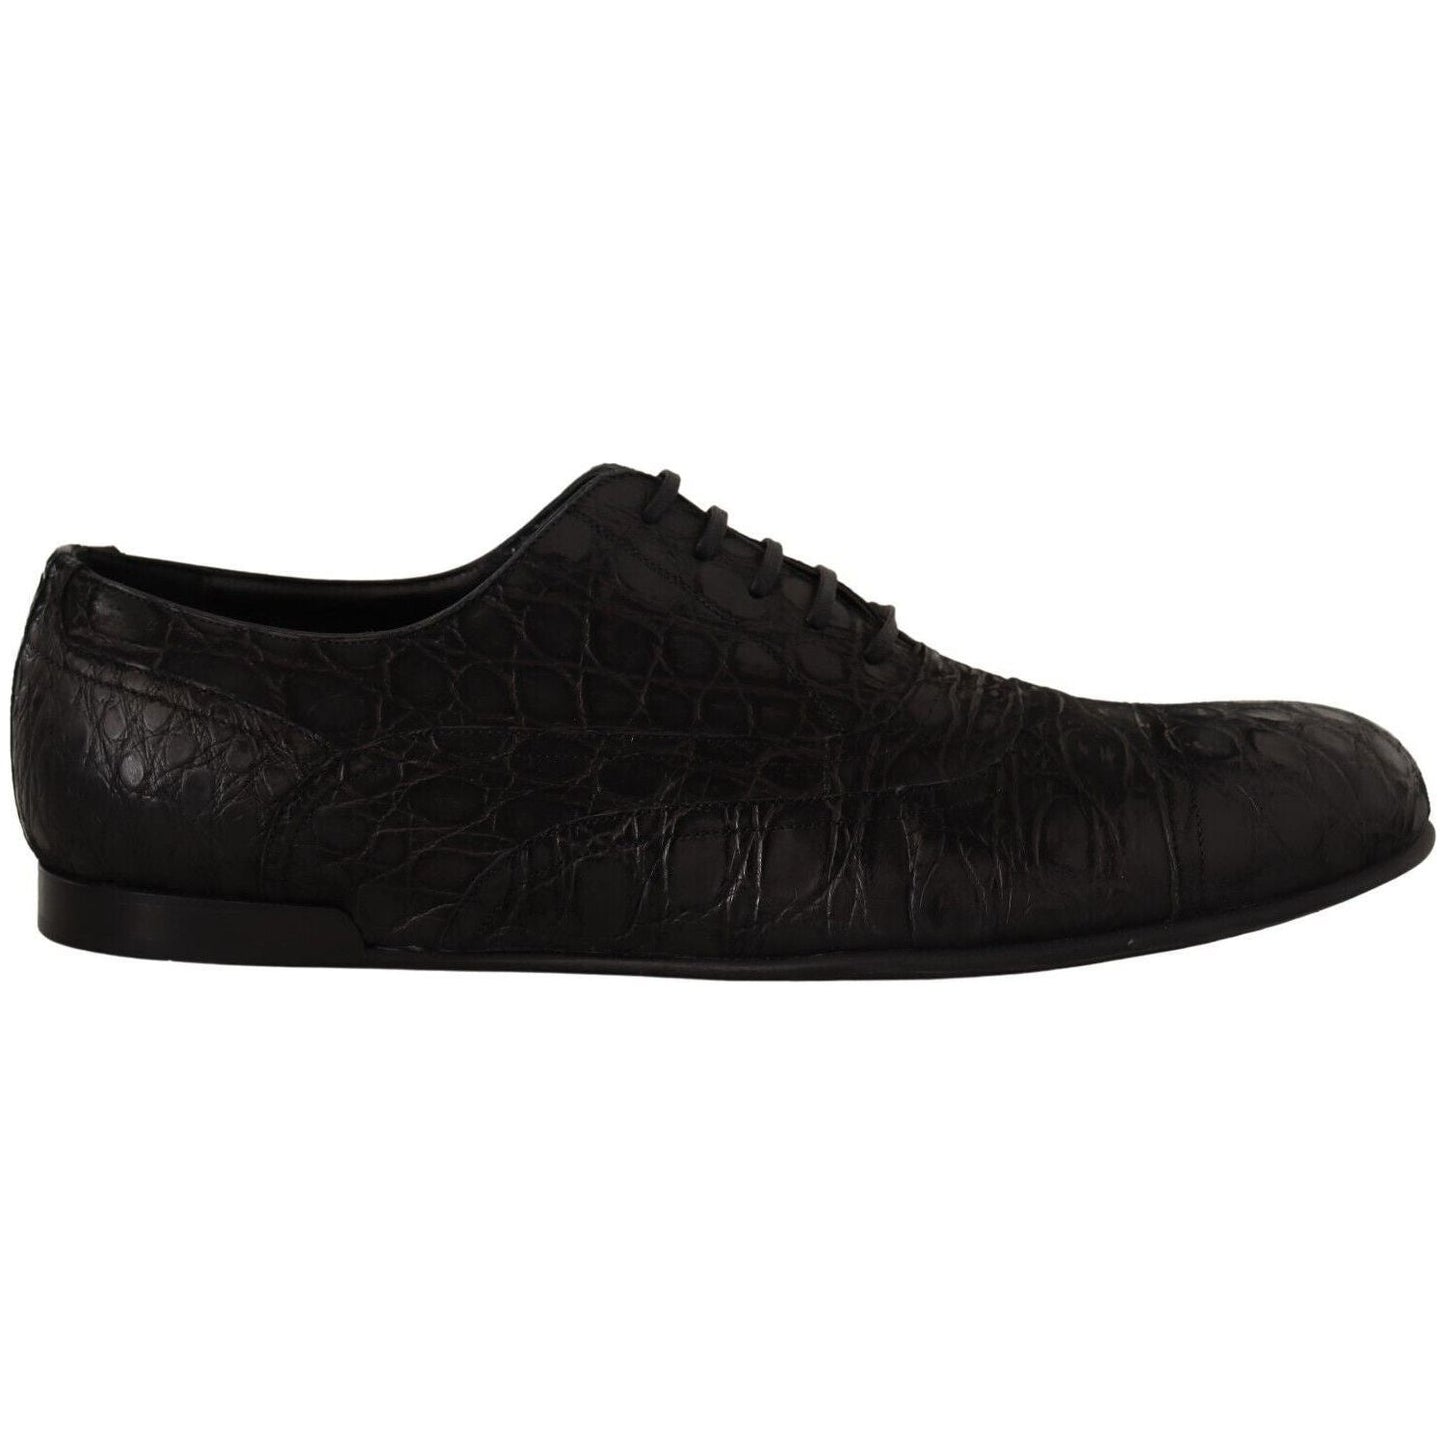 Dolce & Gabbana Elegant Exotic Leather Oxford Shoes black-caiman-leather-mens-oxford-shoes s-l1600-272-deac4031-49f.jpg